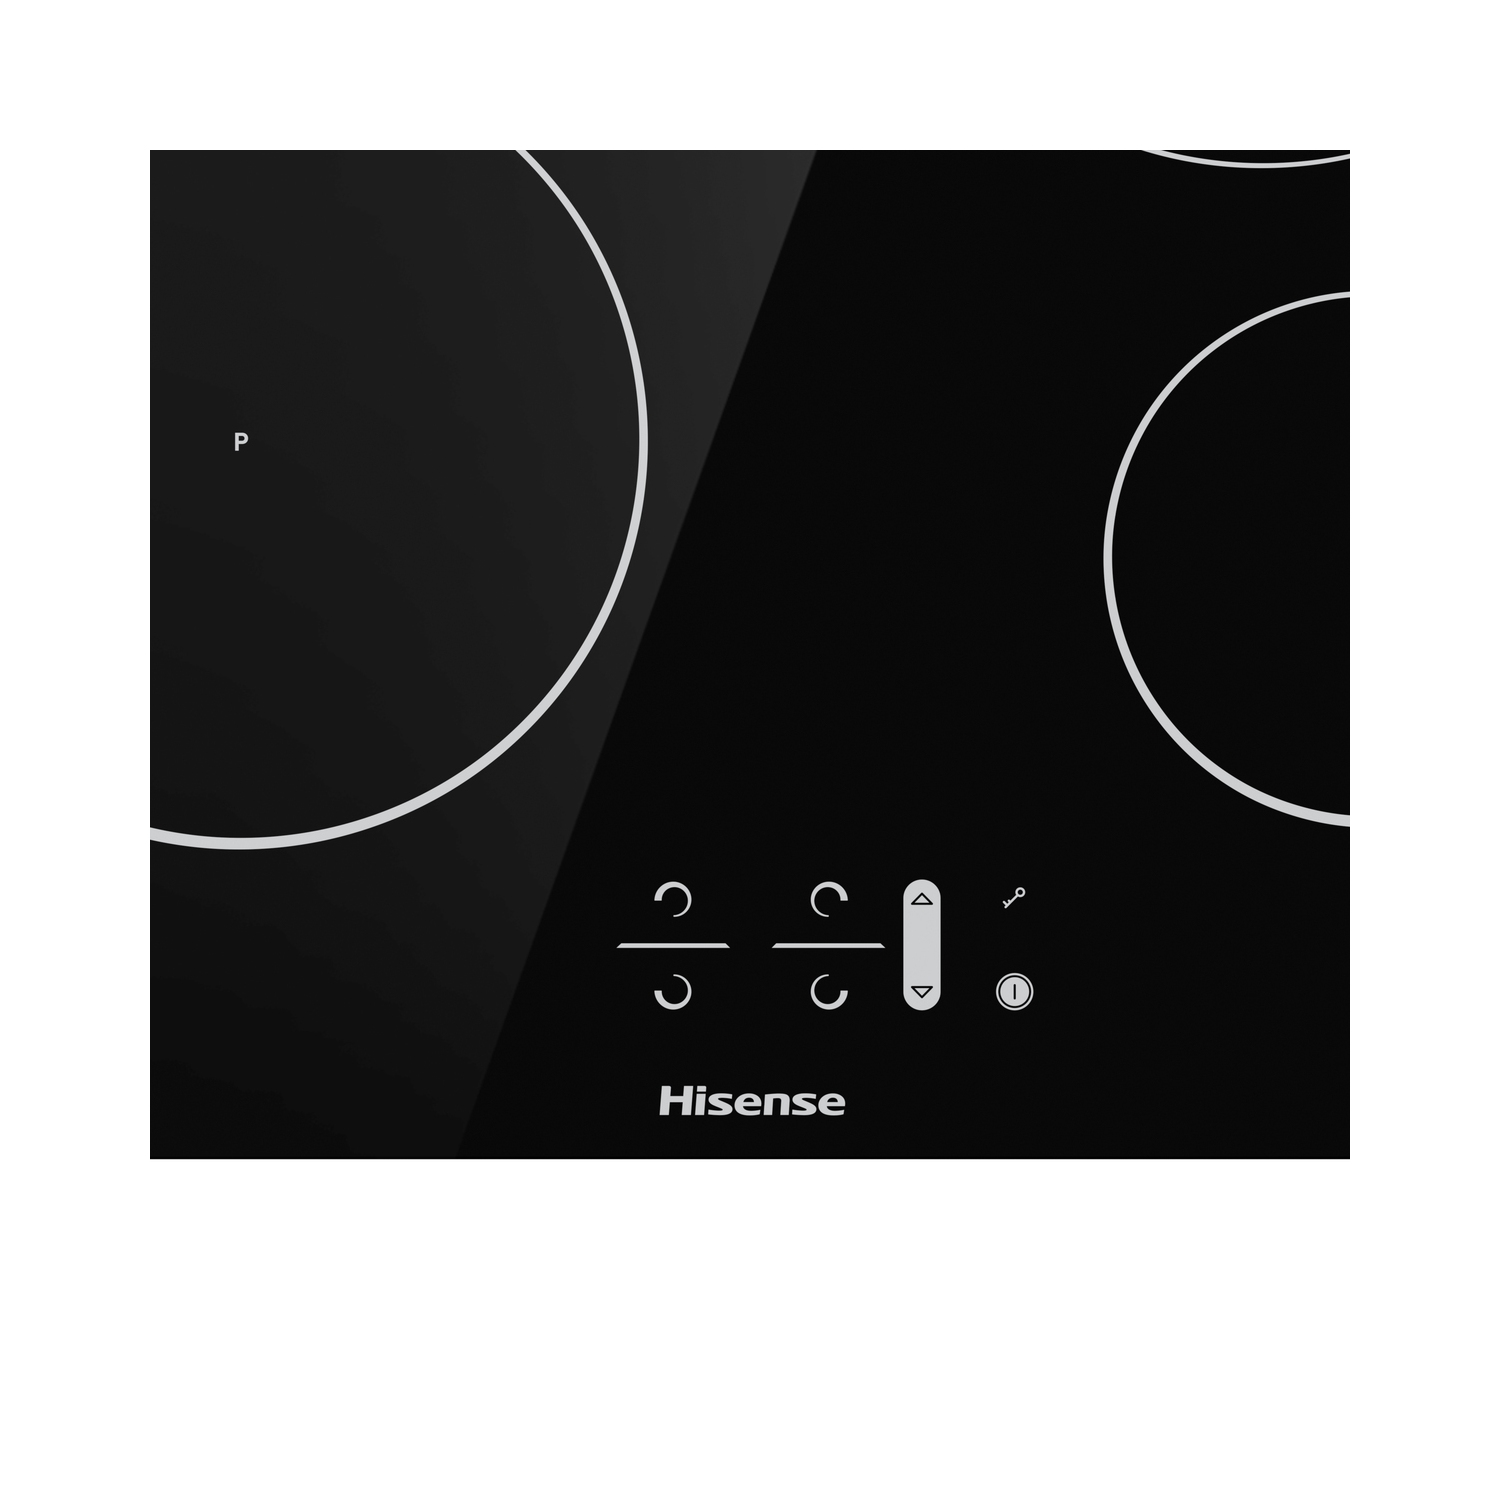 Hisense I6421C 59.5cm Induction Hob - Black - 2